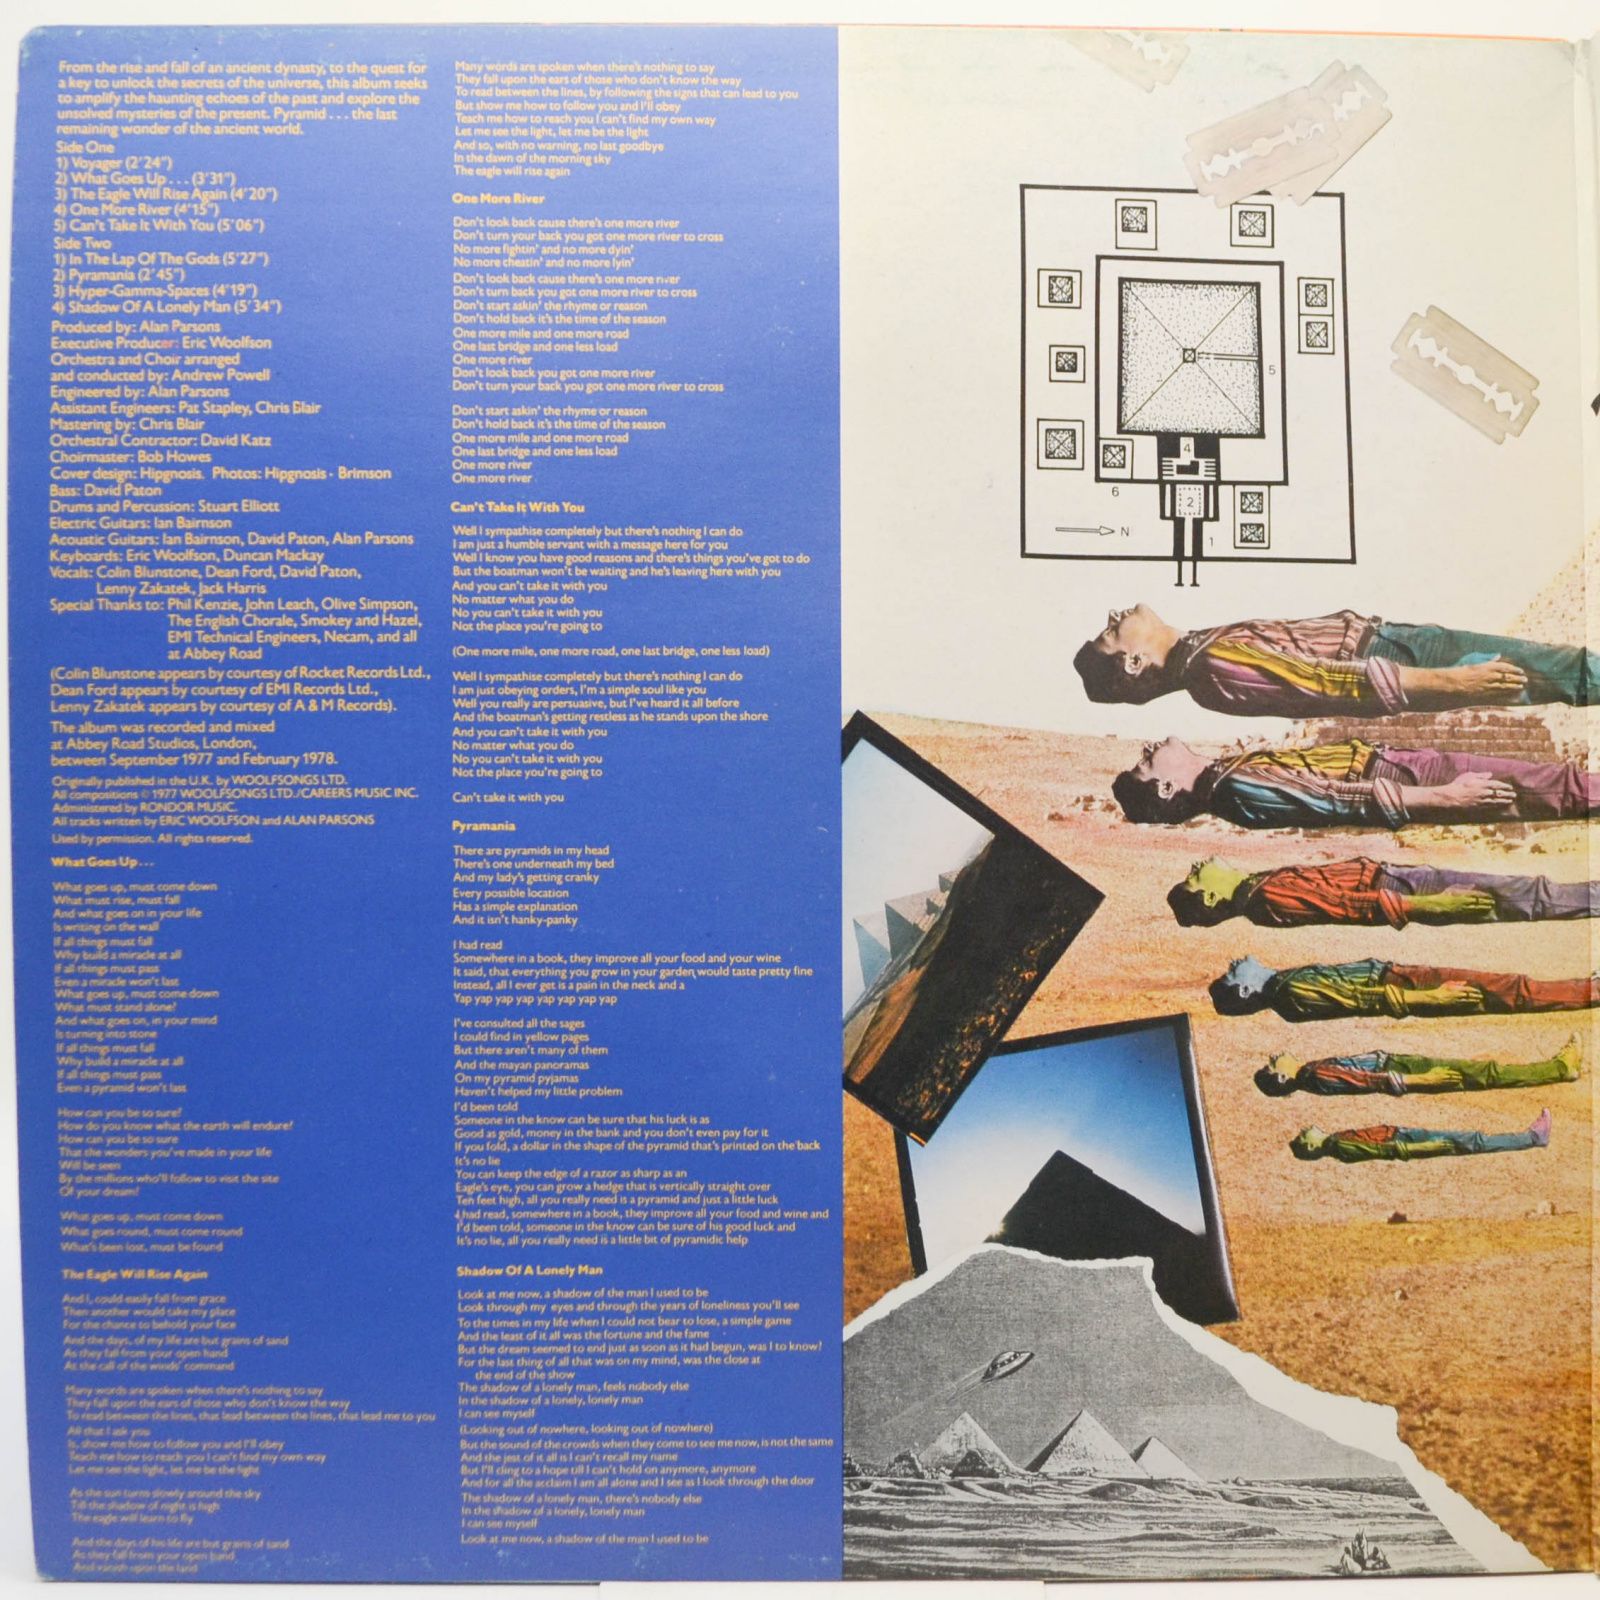 Alan Parsons Project — Pyramid, 1978